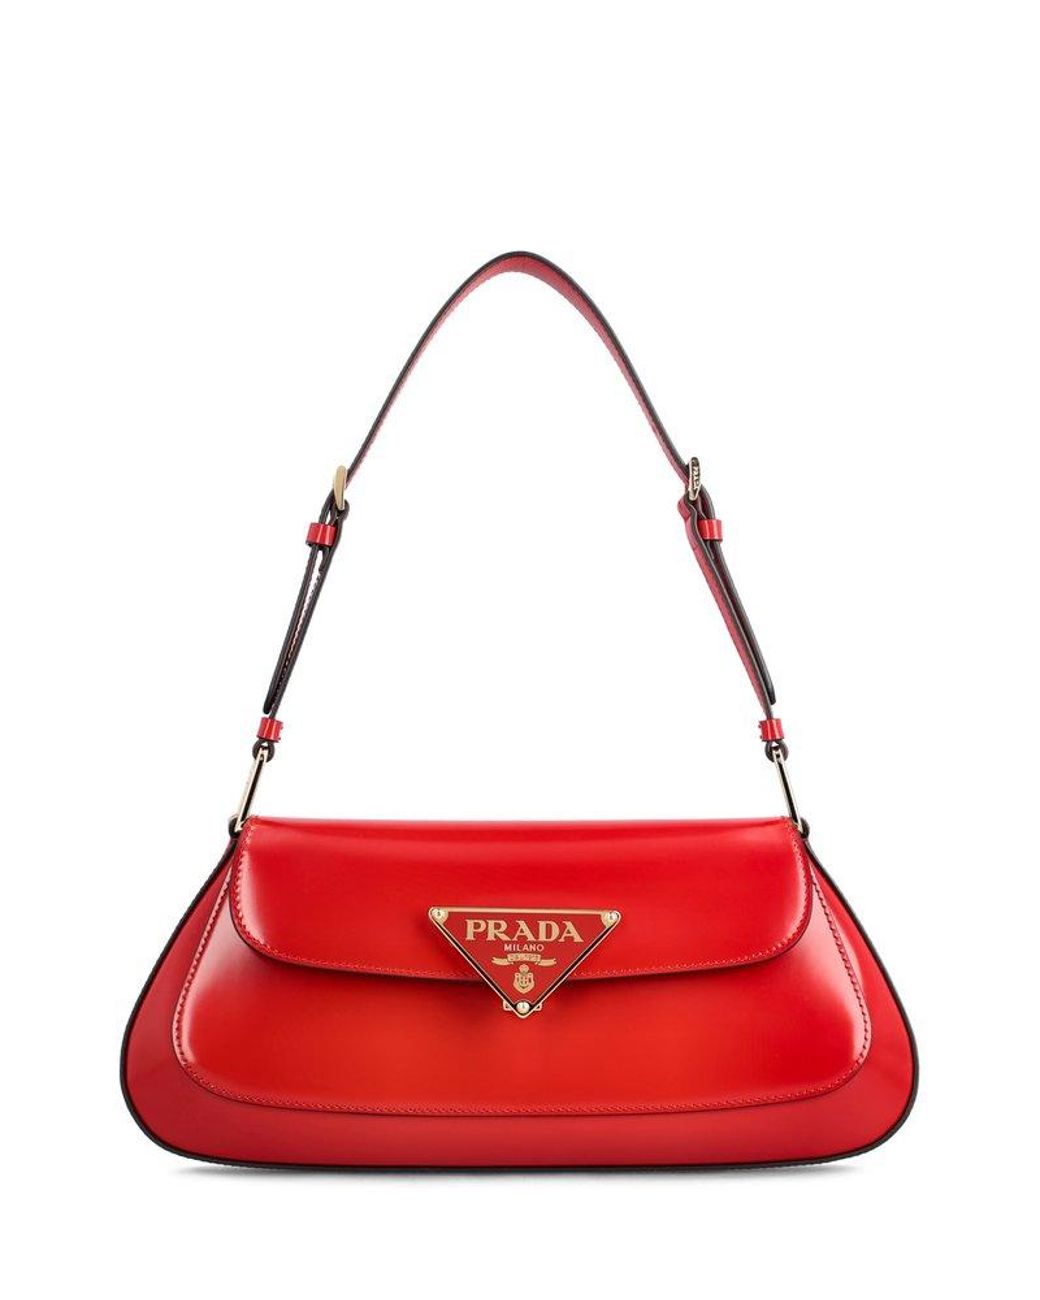 Prada Cleo Leather Shoulder Bag in Red | Lyst